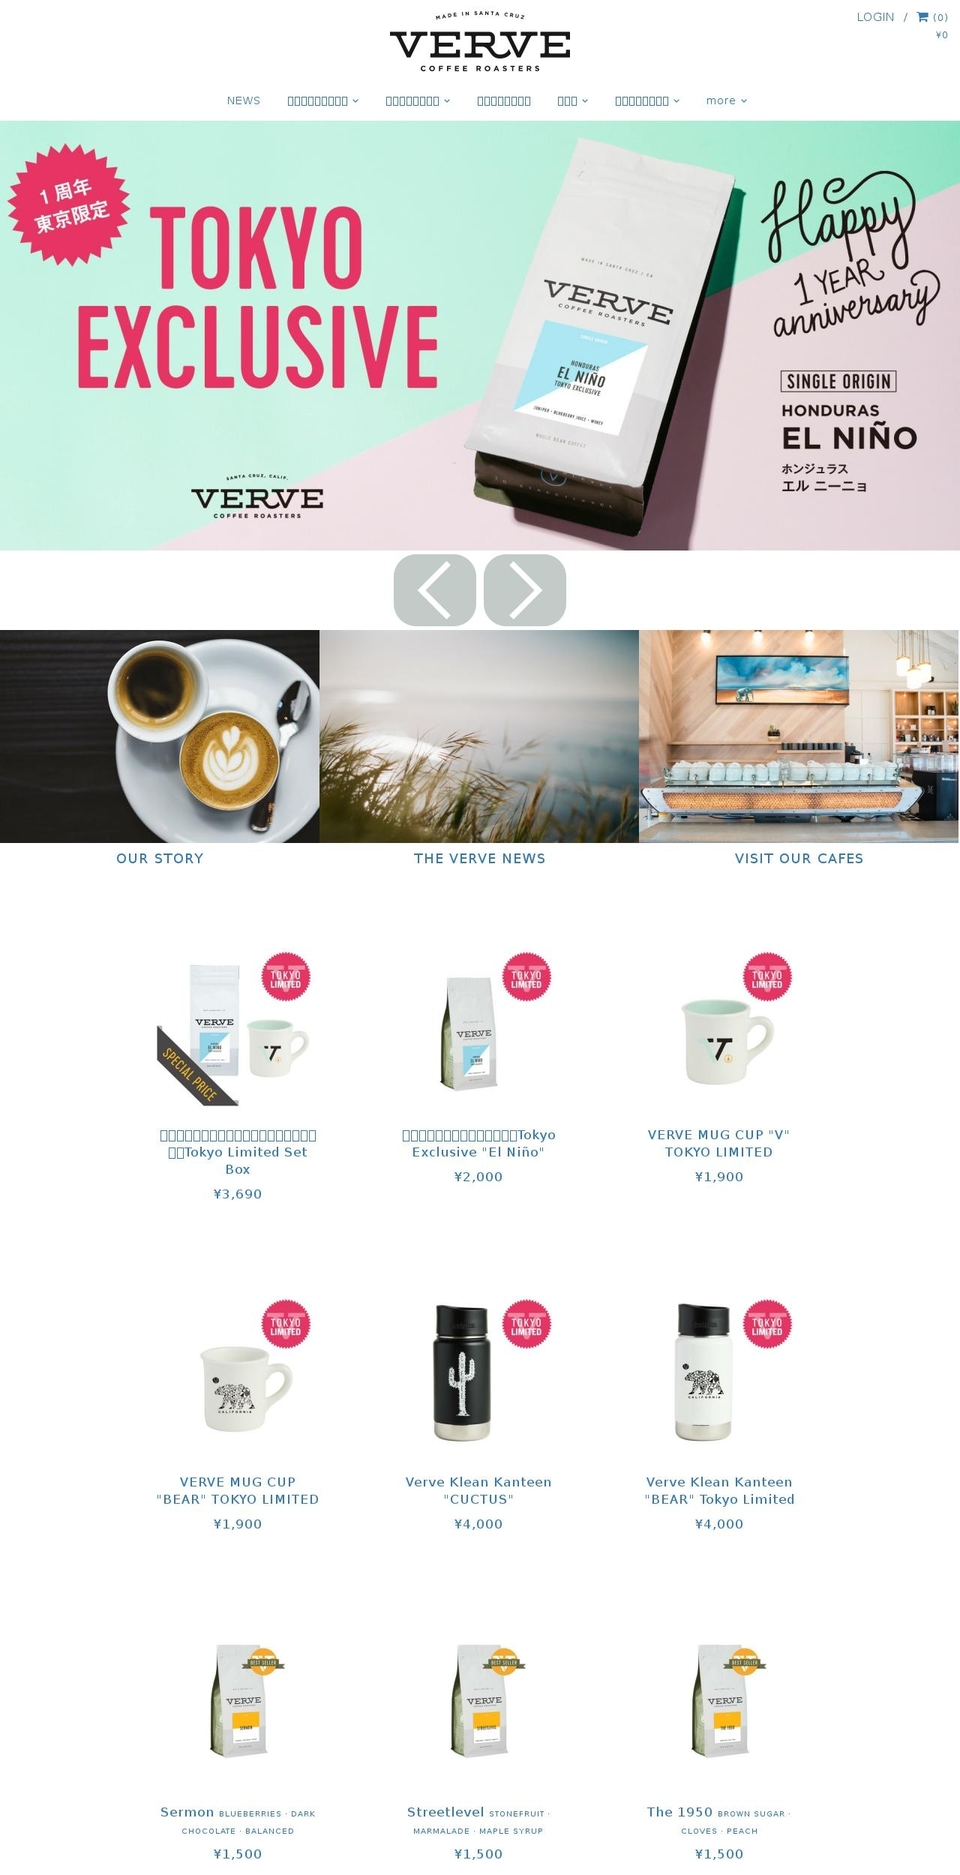 vervecoffee.jp shopify website screenshot